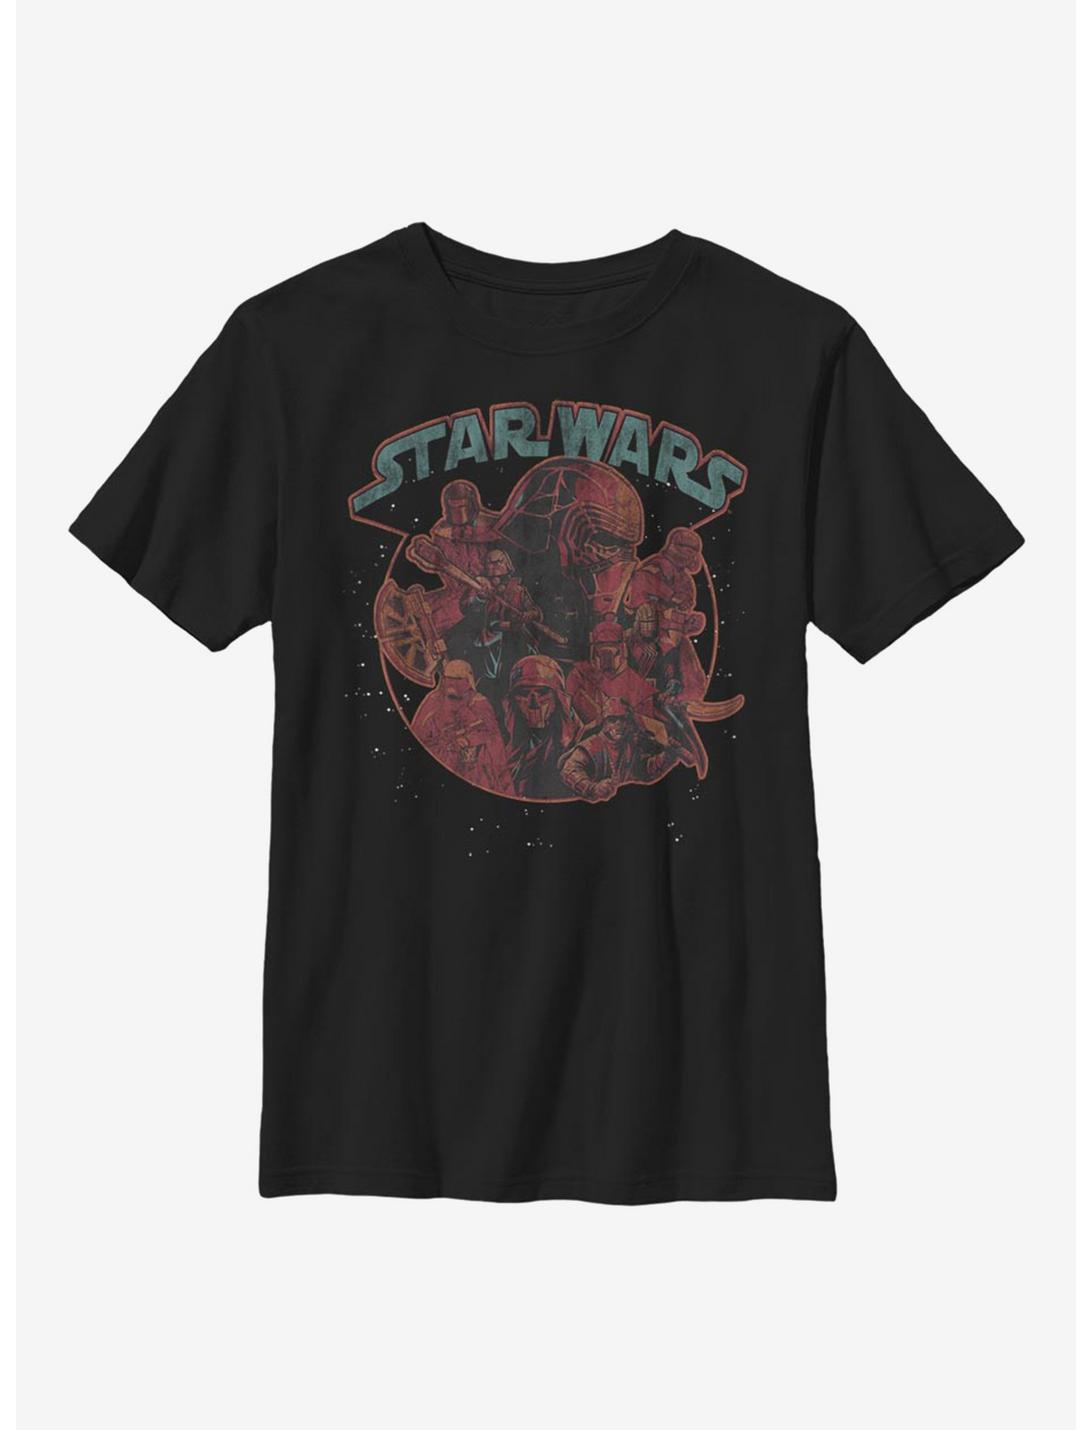 Star Wars Episode IX The Rise Of Skywalker Retro Villains Youth T-Shirt, BLACK, hi-res